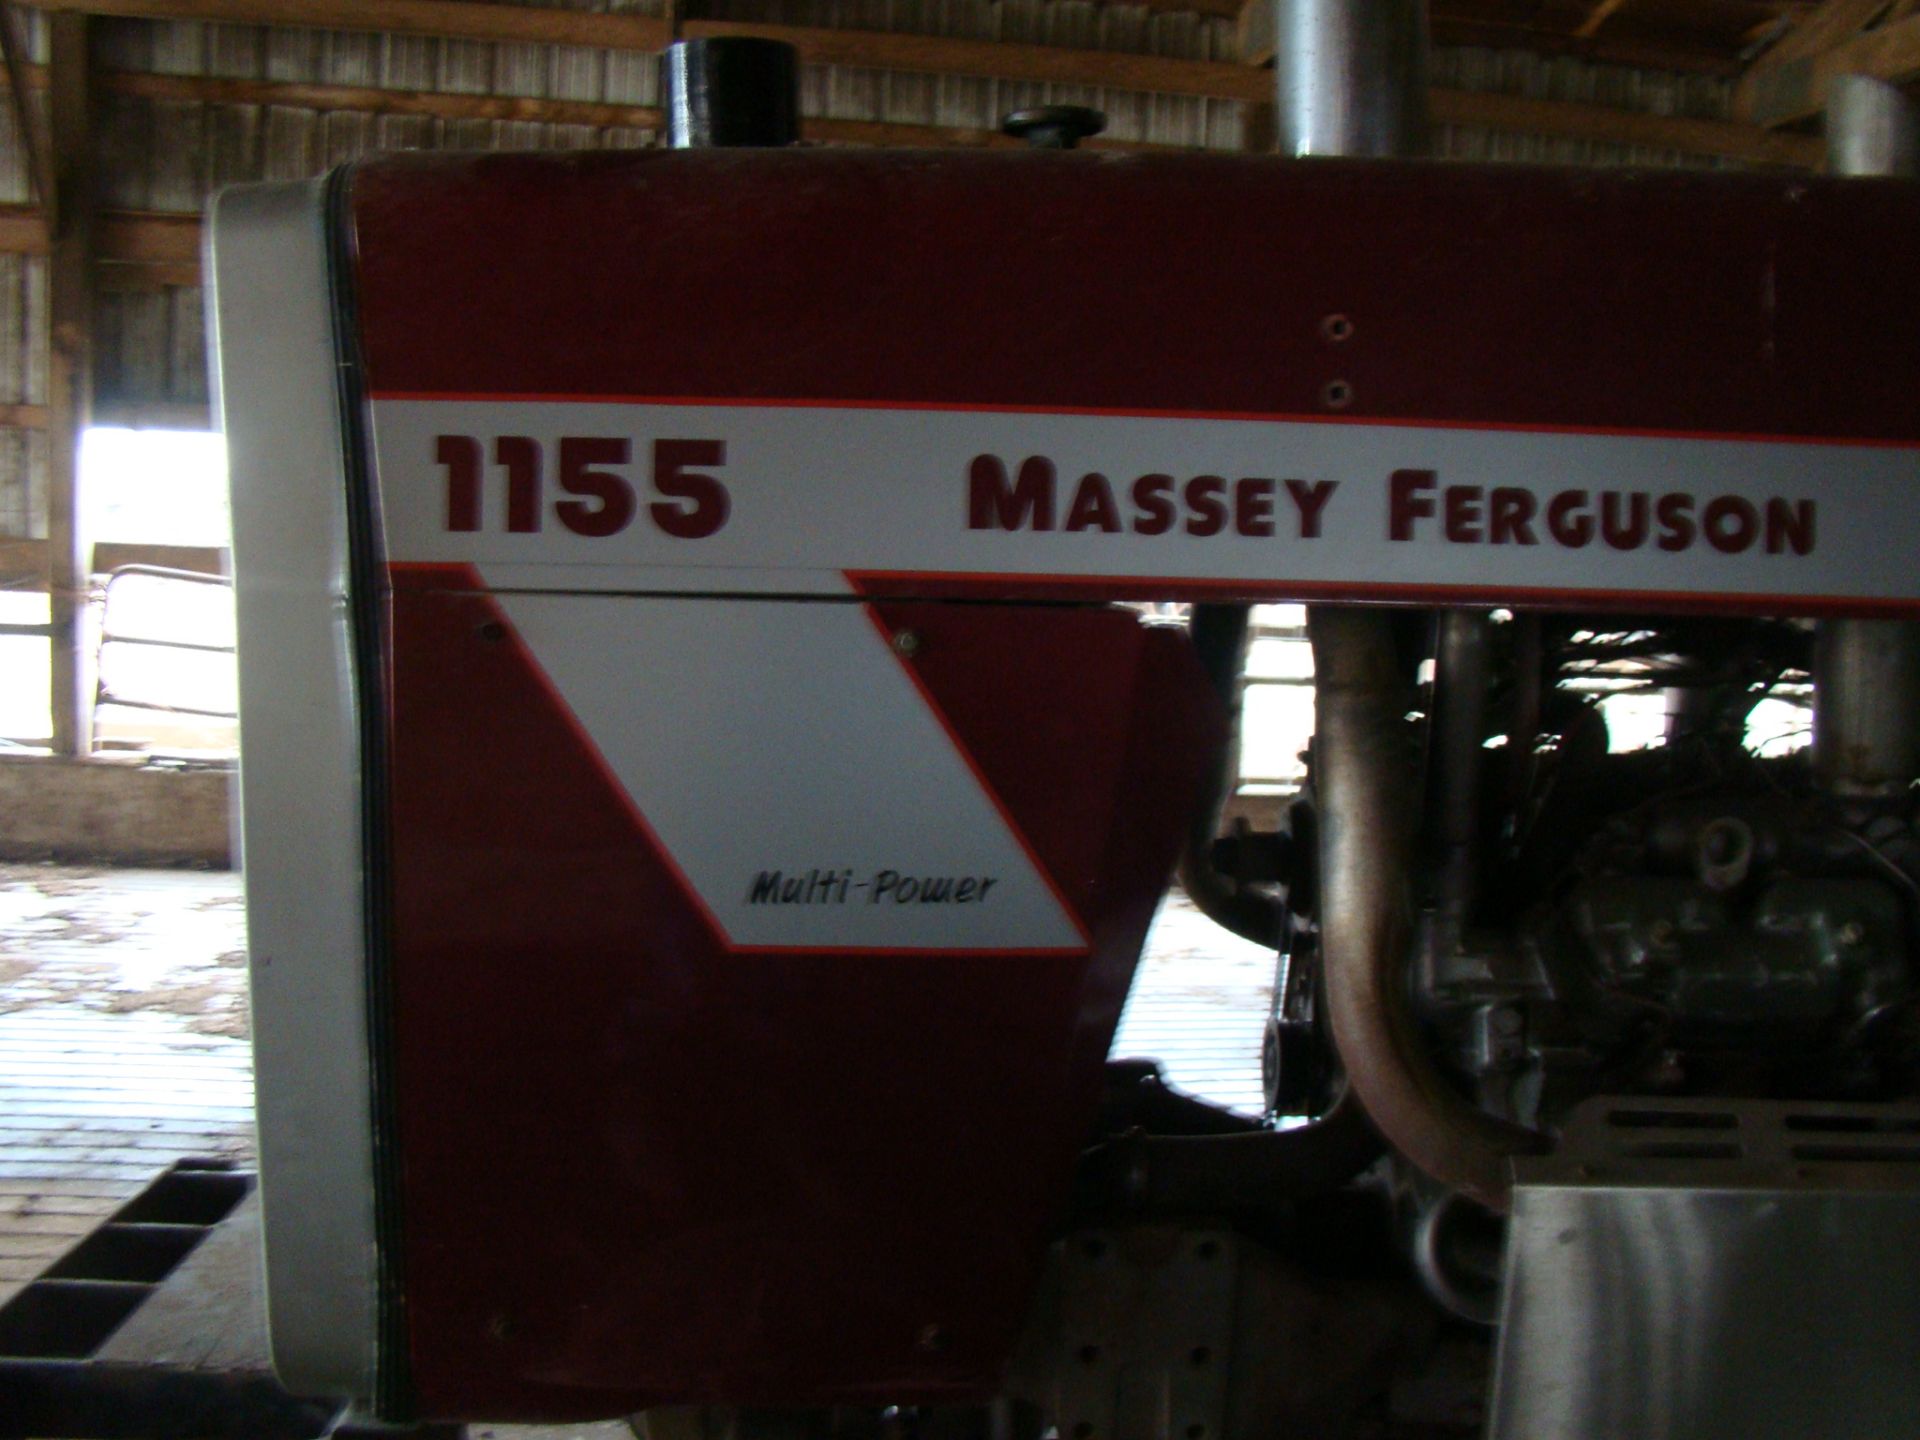 Massey Ferguson 1155 pulling tractor runs - Image 21 of 24